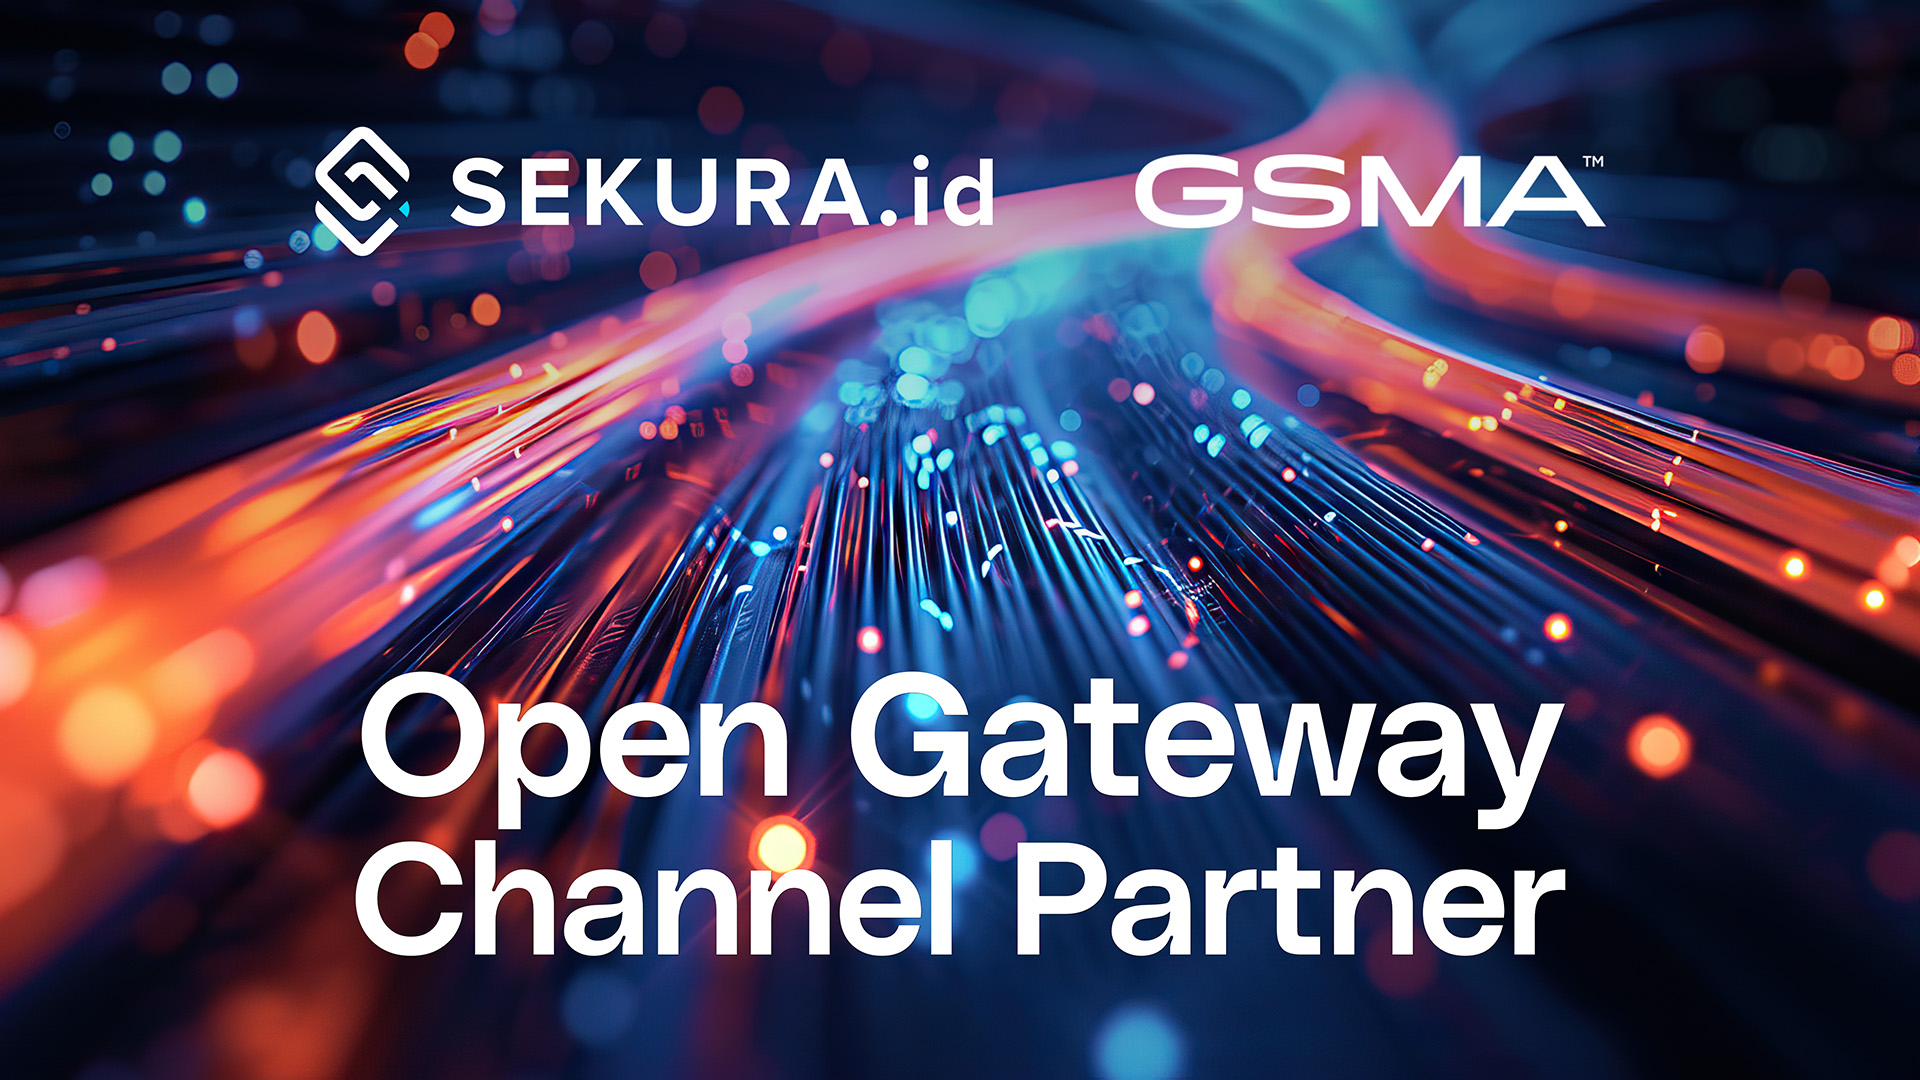 Sekura.id Becomes Official GSMA Open Gateway Channel Partner